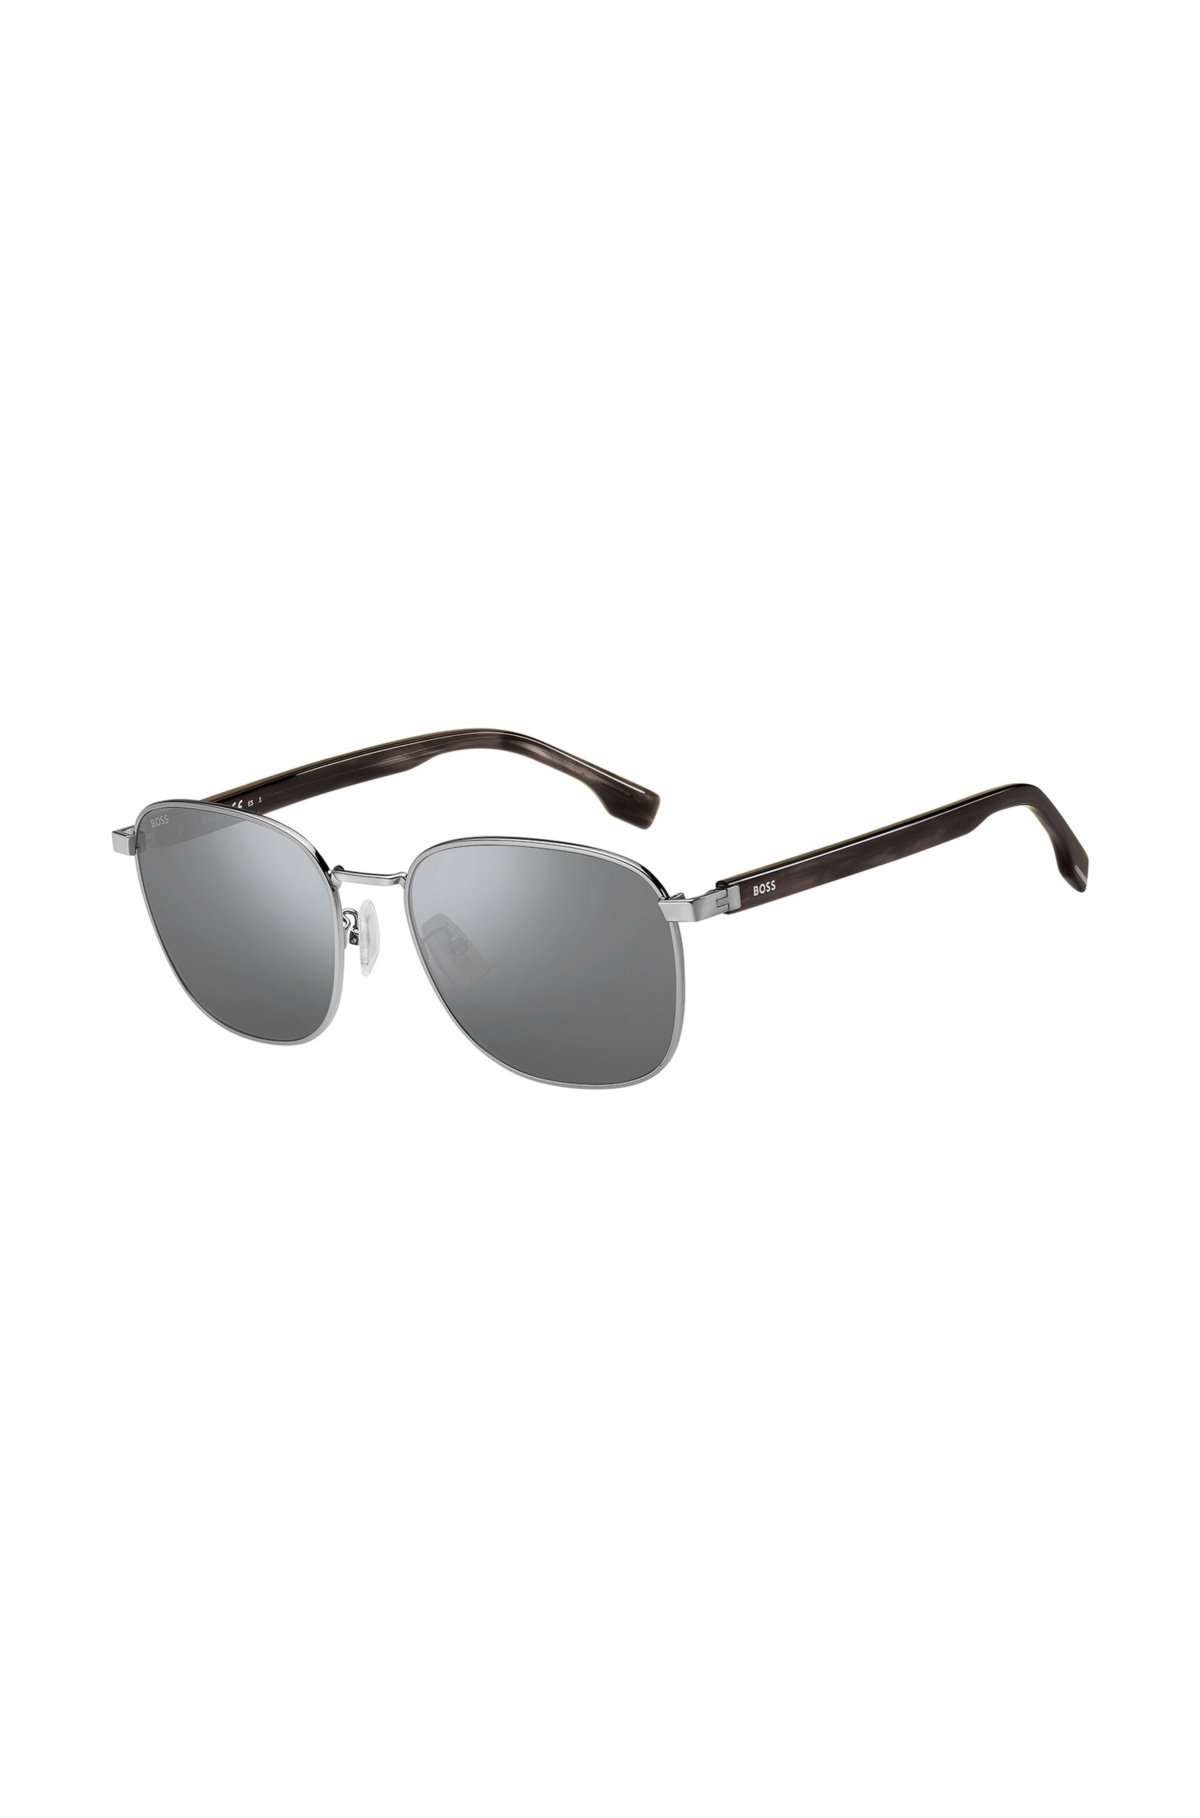 Louis Vuitton LV Match Sunglasses, Black, Free